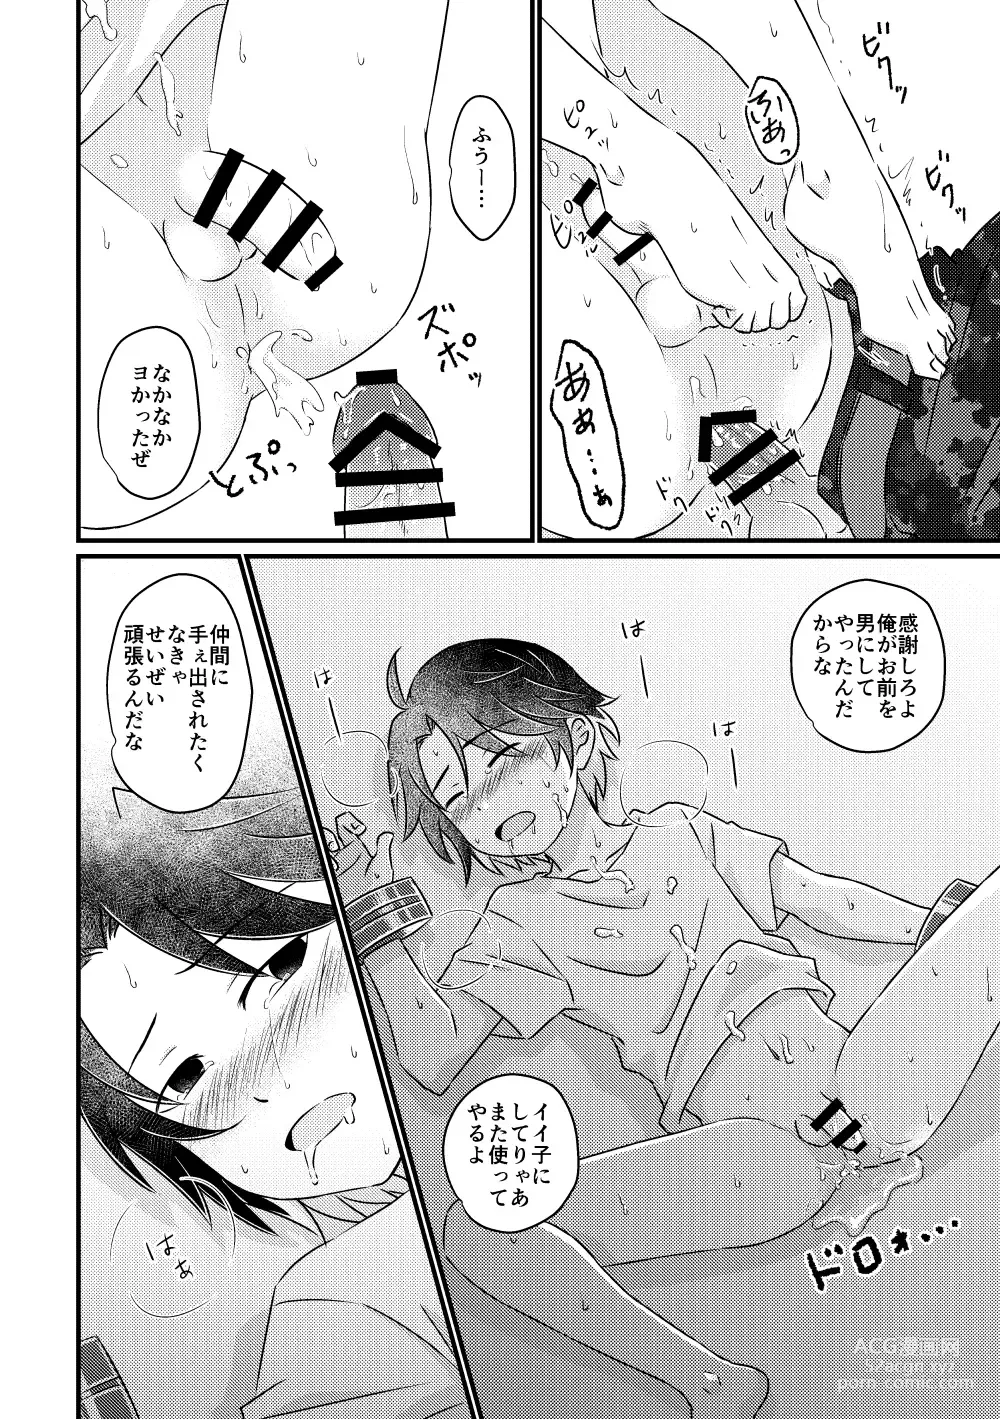 Page 27 of doujinshi Tokubetsu Shidou in Pennywort